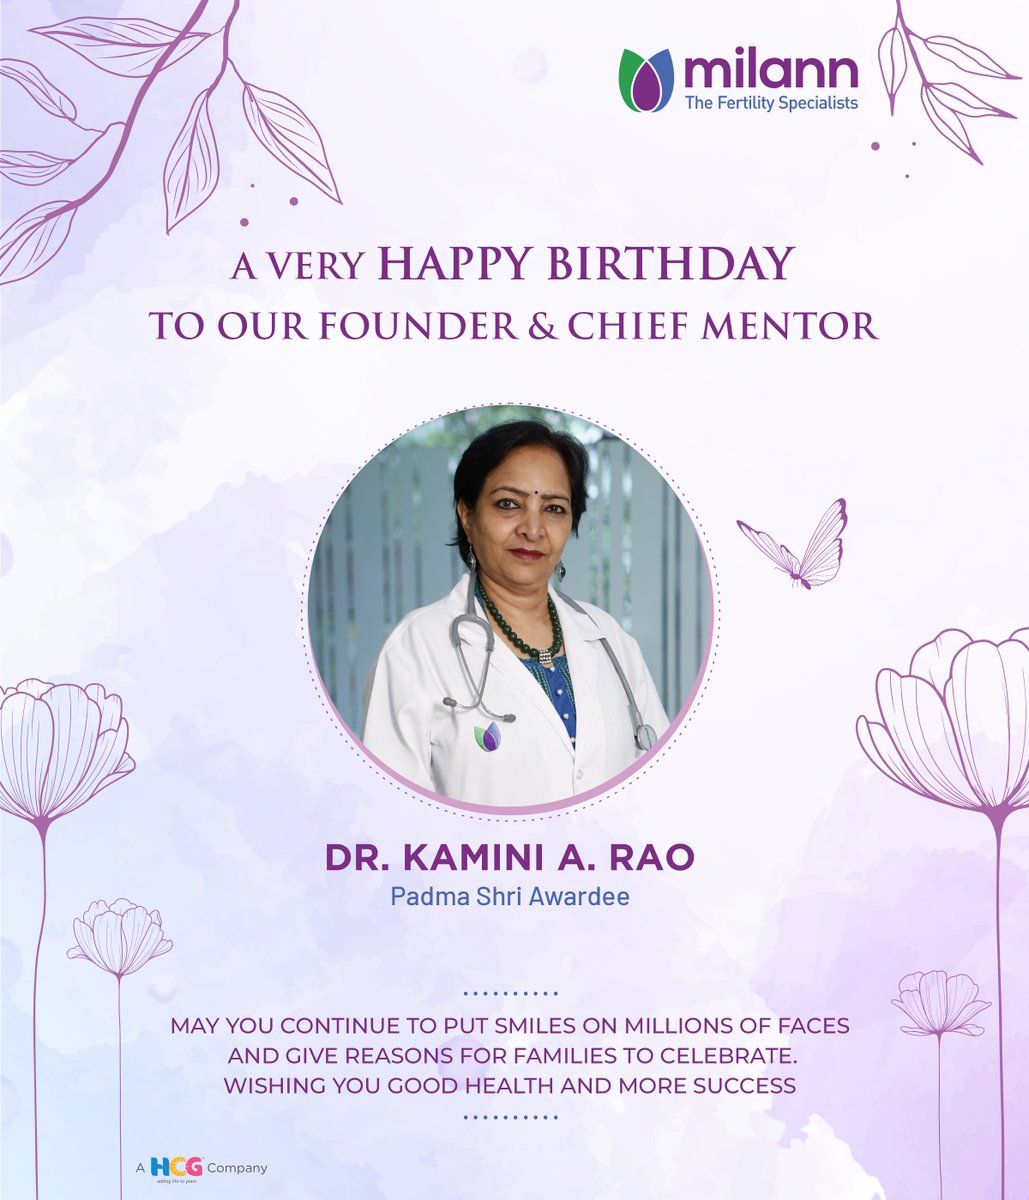 Team Milann wishes you a very Happy Birthday !! Dr. Kamini Rao, (Chief Mentor & Padma Shri Awardee,)

#Milann #MilannFertility #MilannHospital #Fertility #Birthing #Hospital #MakingMiracles #Wishes #Birthday #happybirthday #KaminiRao #drkaminirao